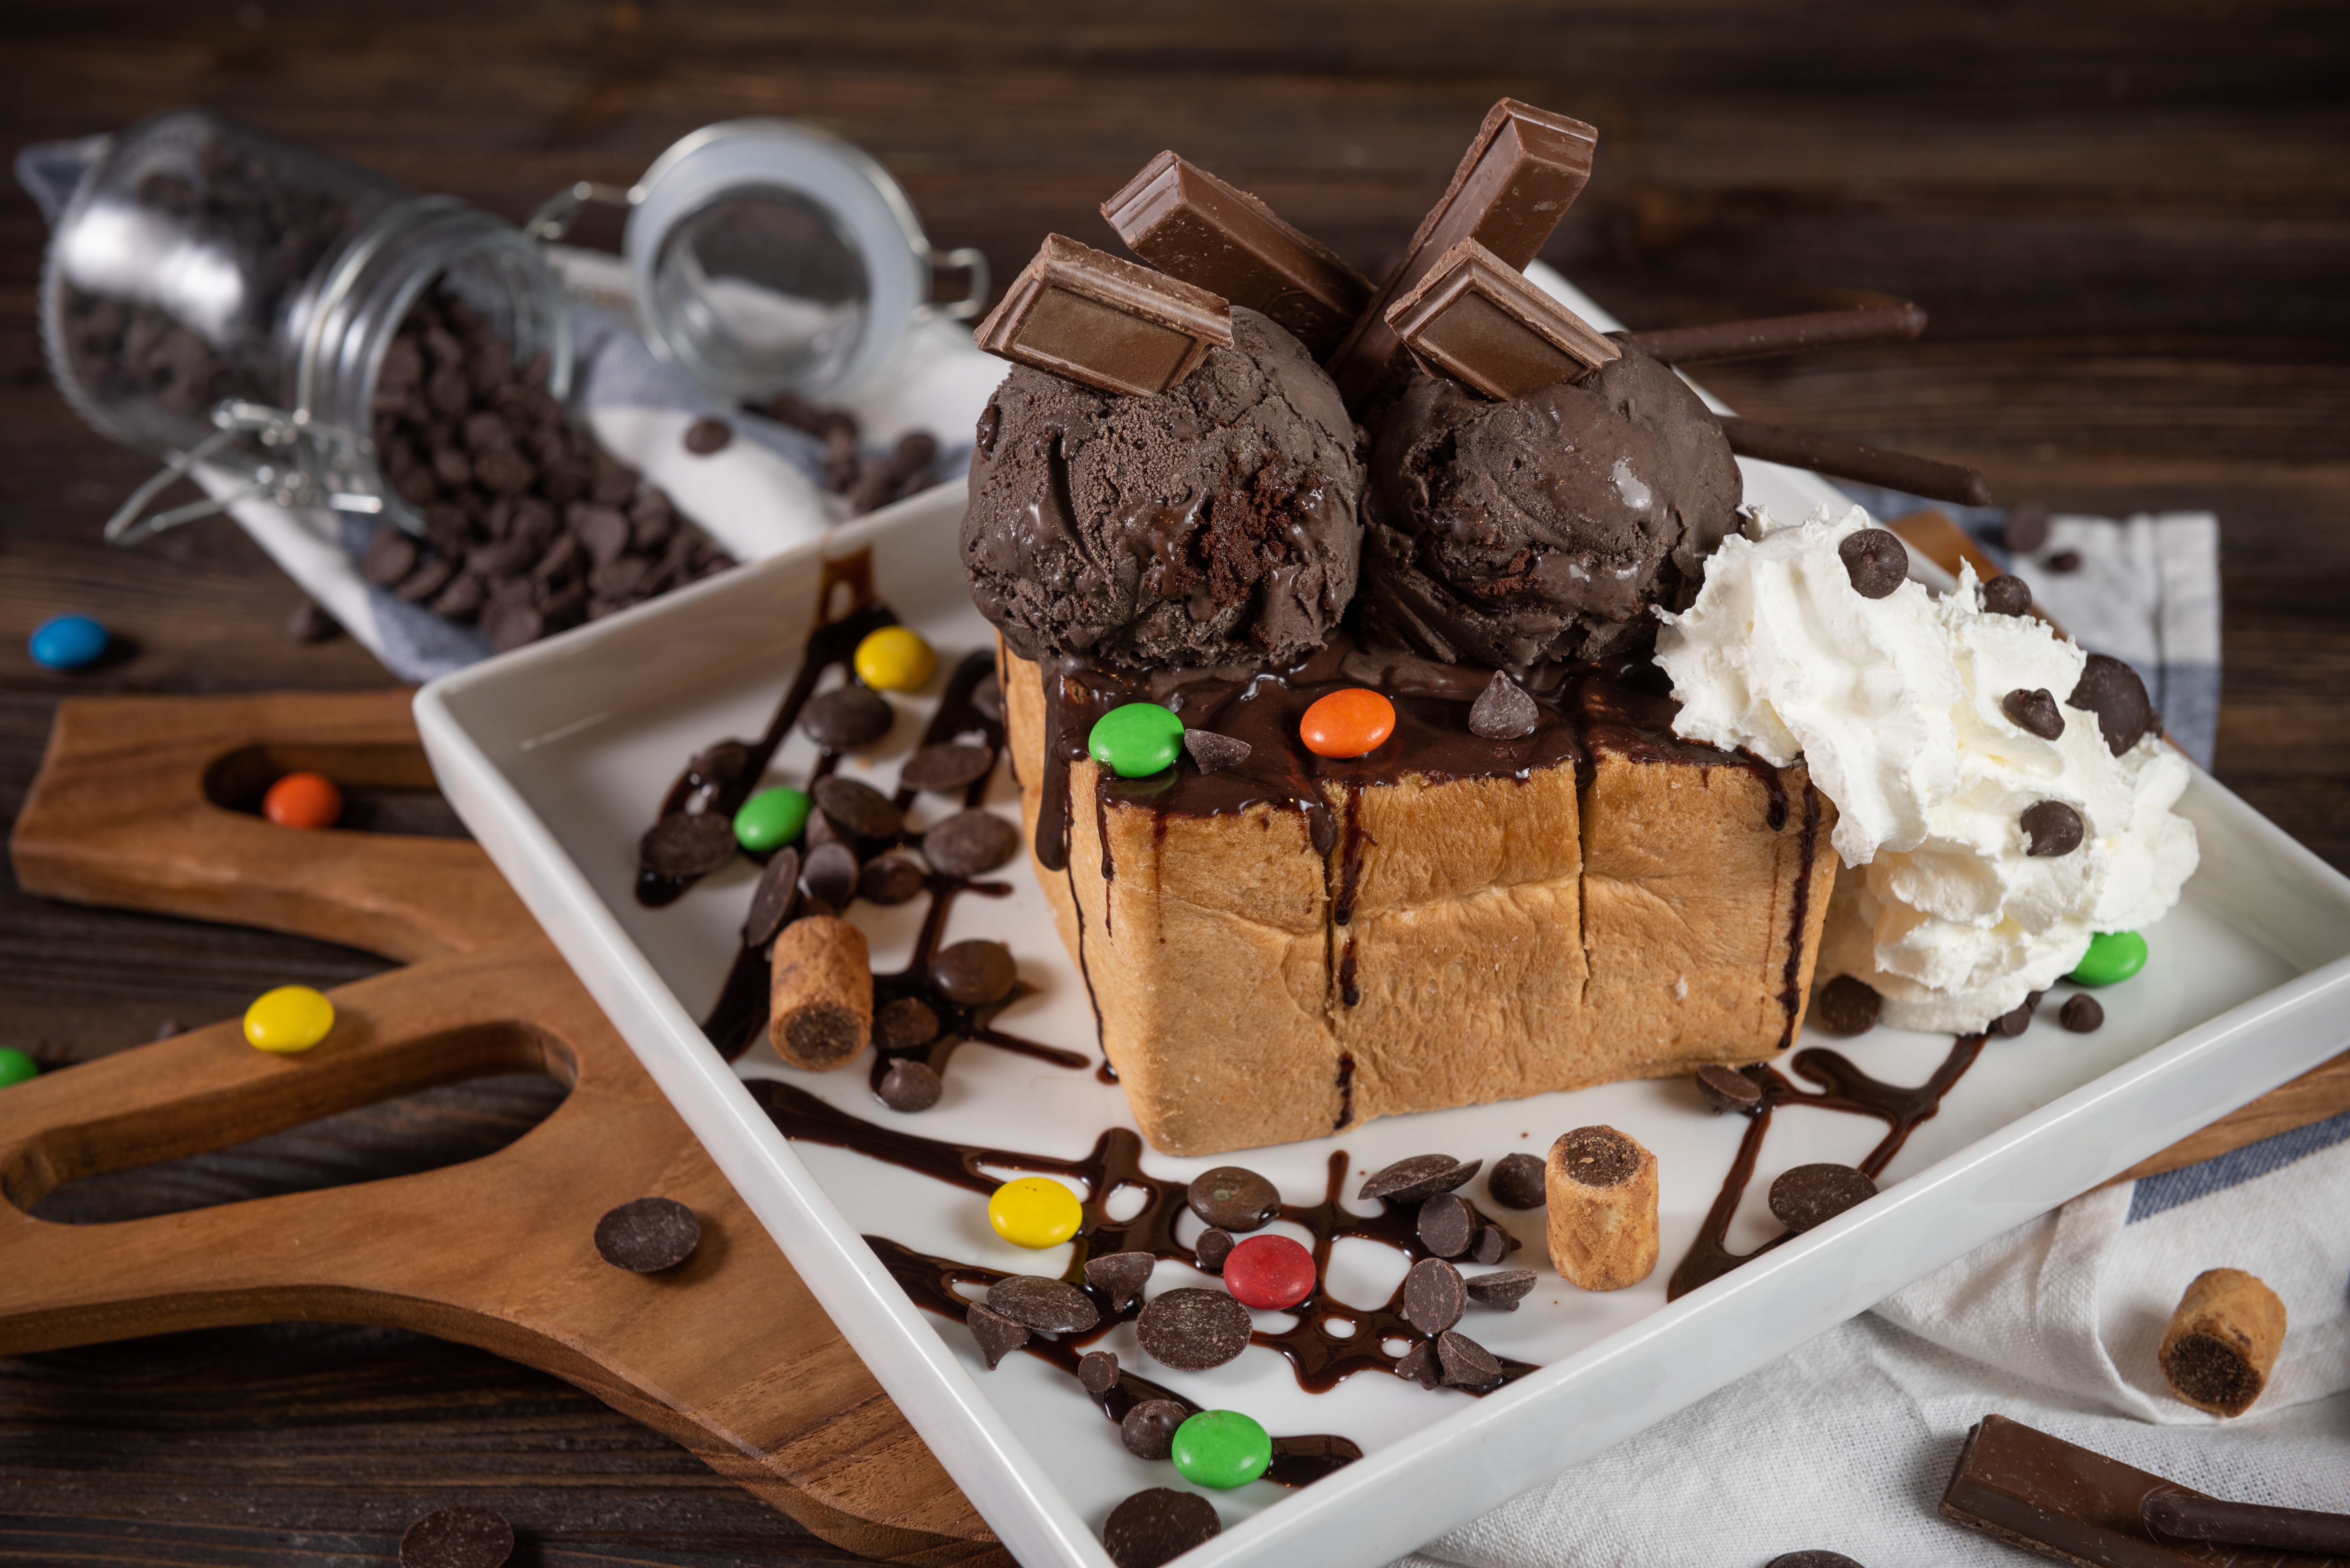 Choco ice. Шоколадные сладости. Шоколадный десерт. Десерт с шоколадом. Десерты из шоколада.